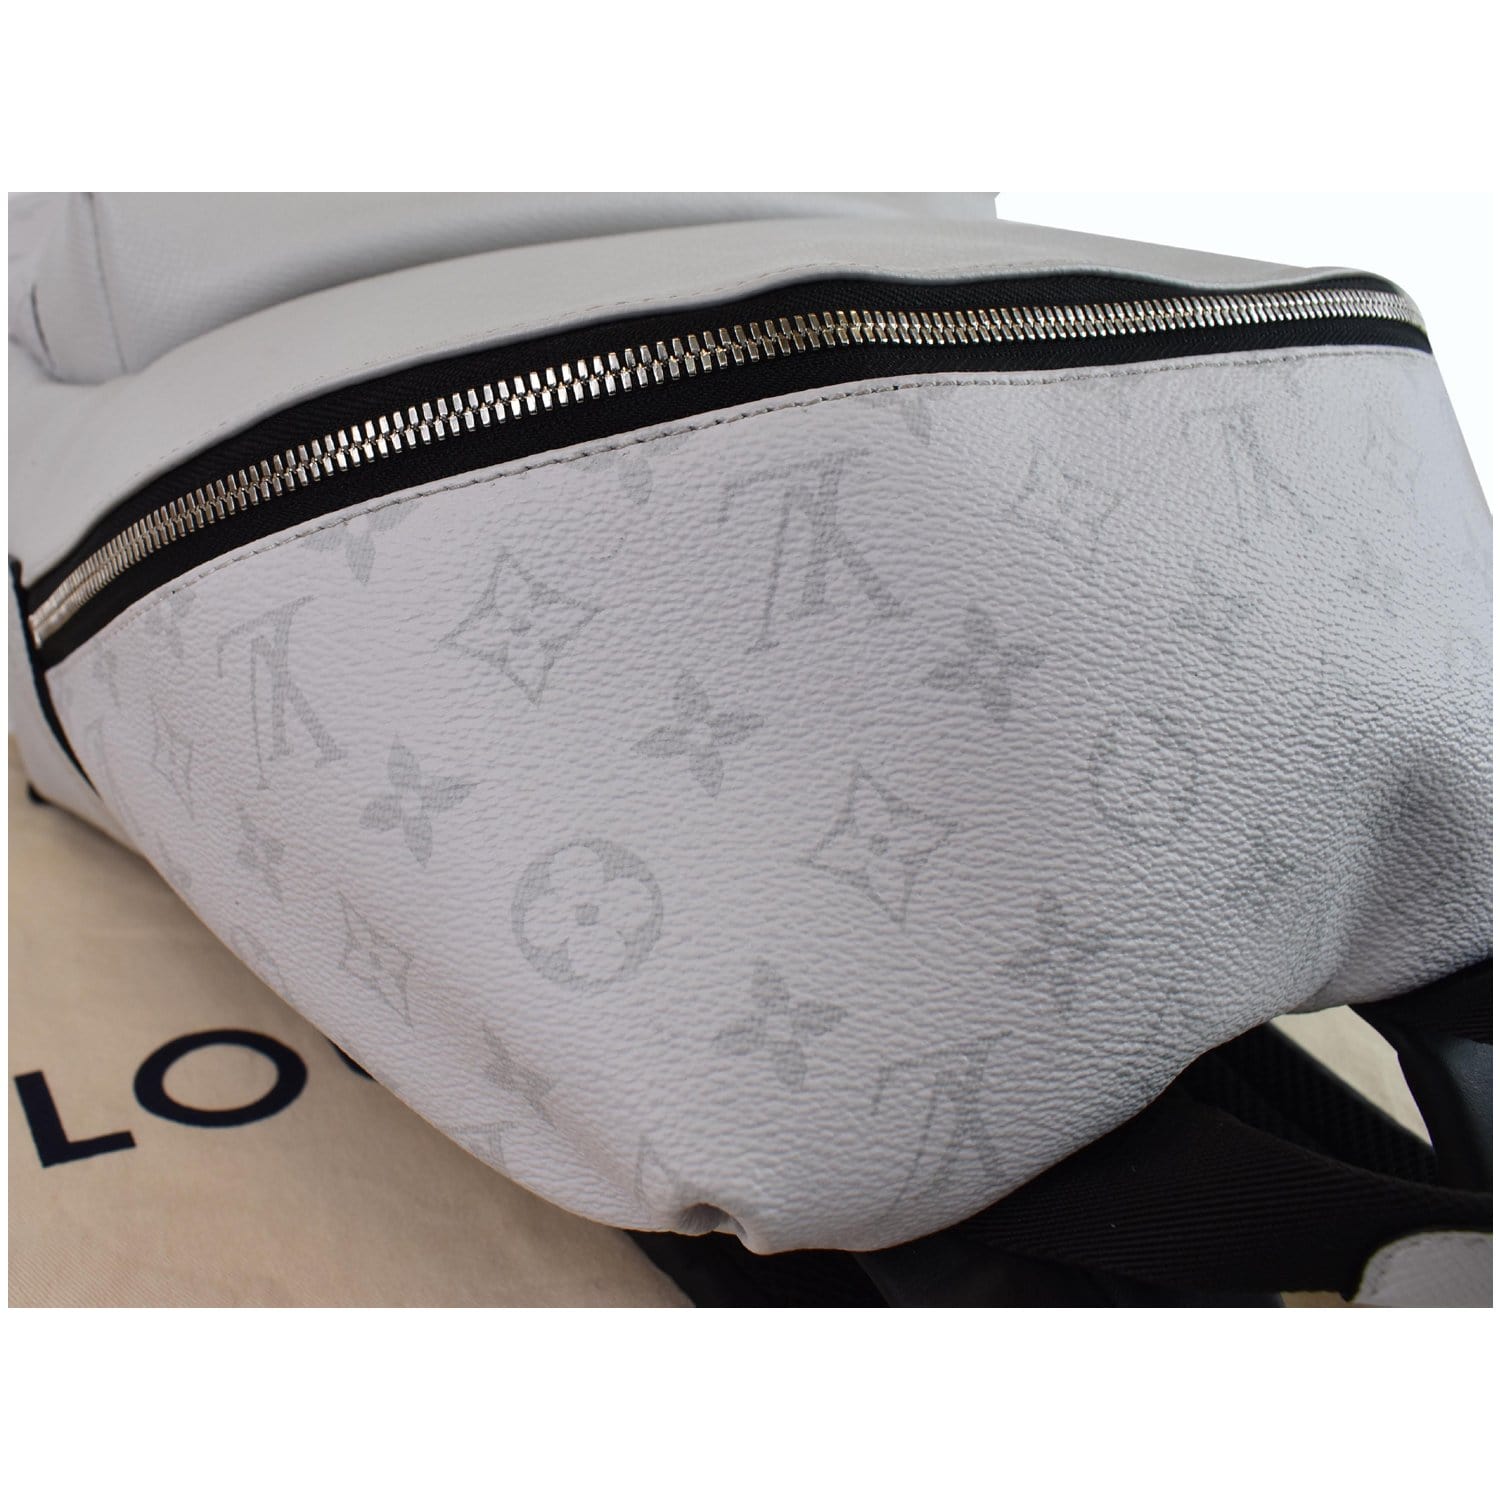 Louis Vuitton Discovery Backpack Optic White autres Toiles Monogram